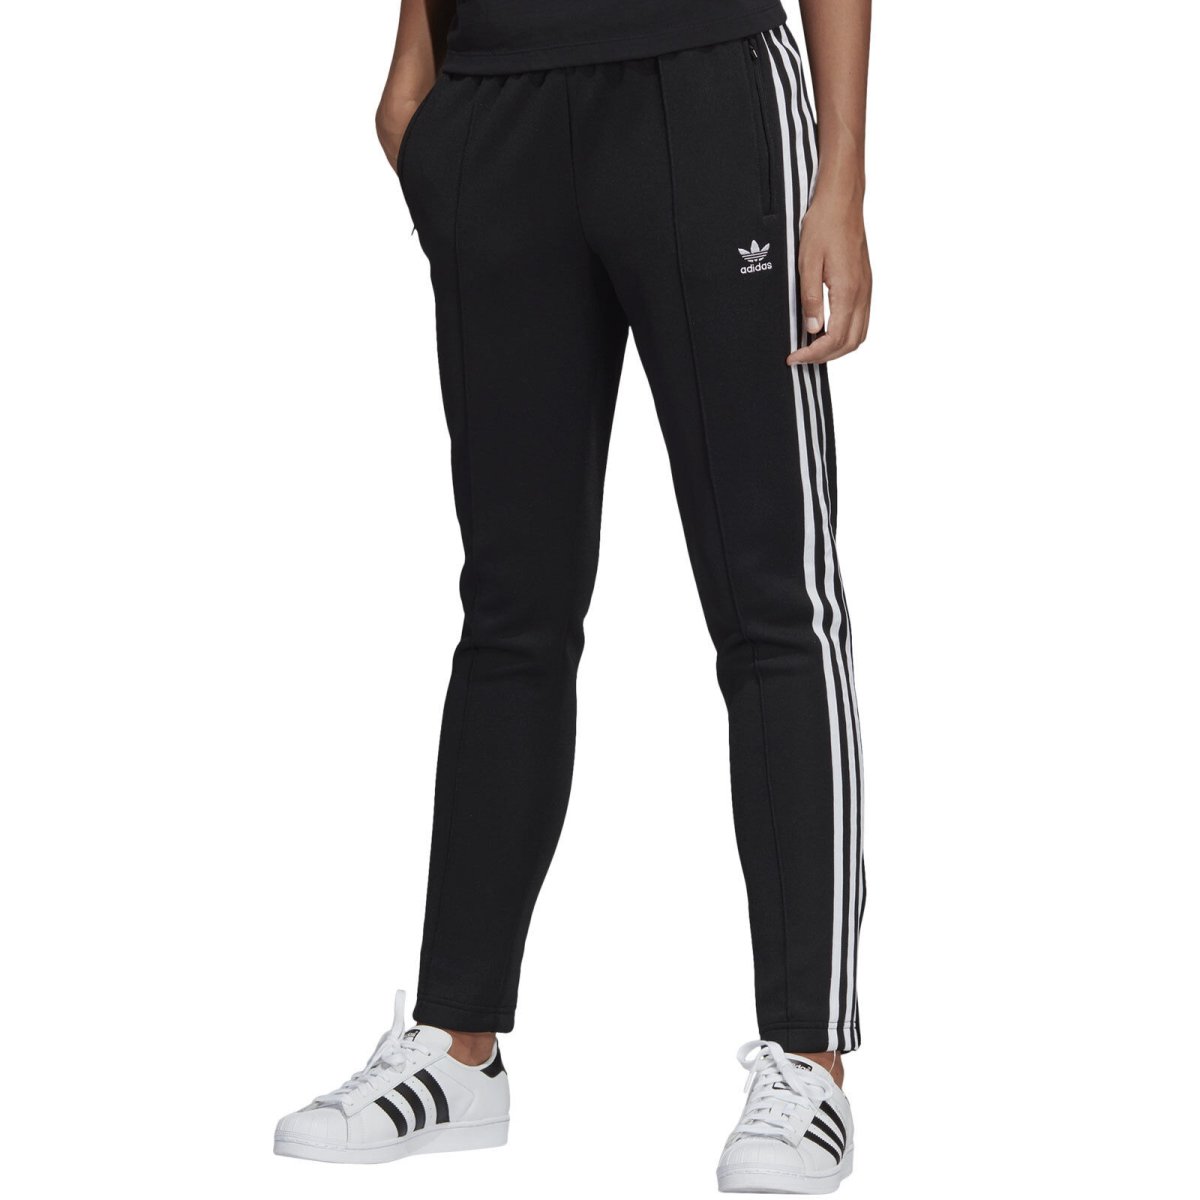 Adidas Originals SST штаны